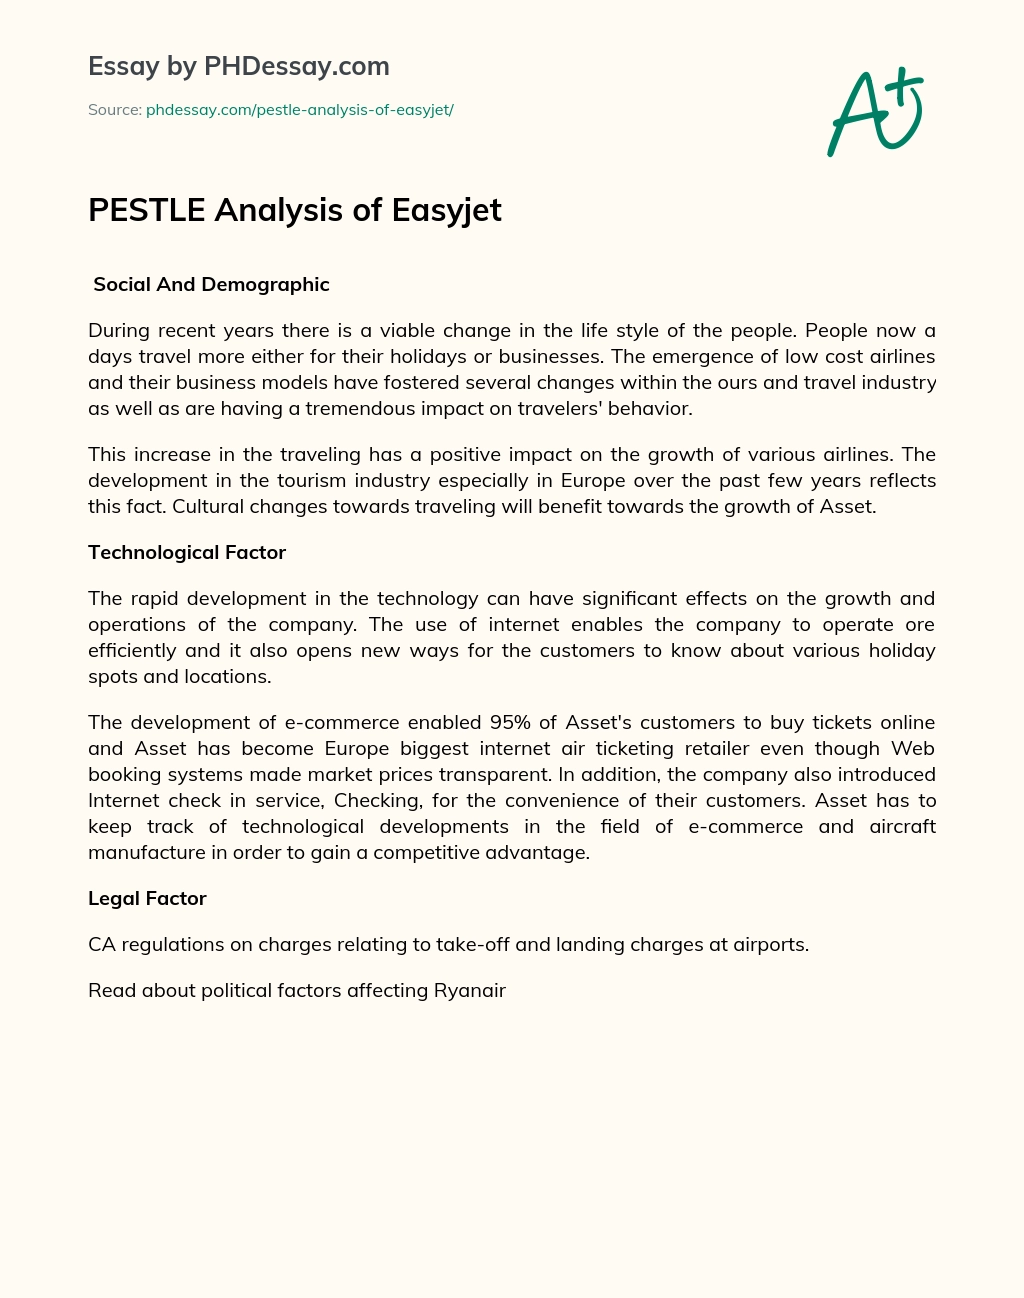 PESTLE Analysis of Easyjet essay